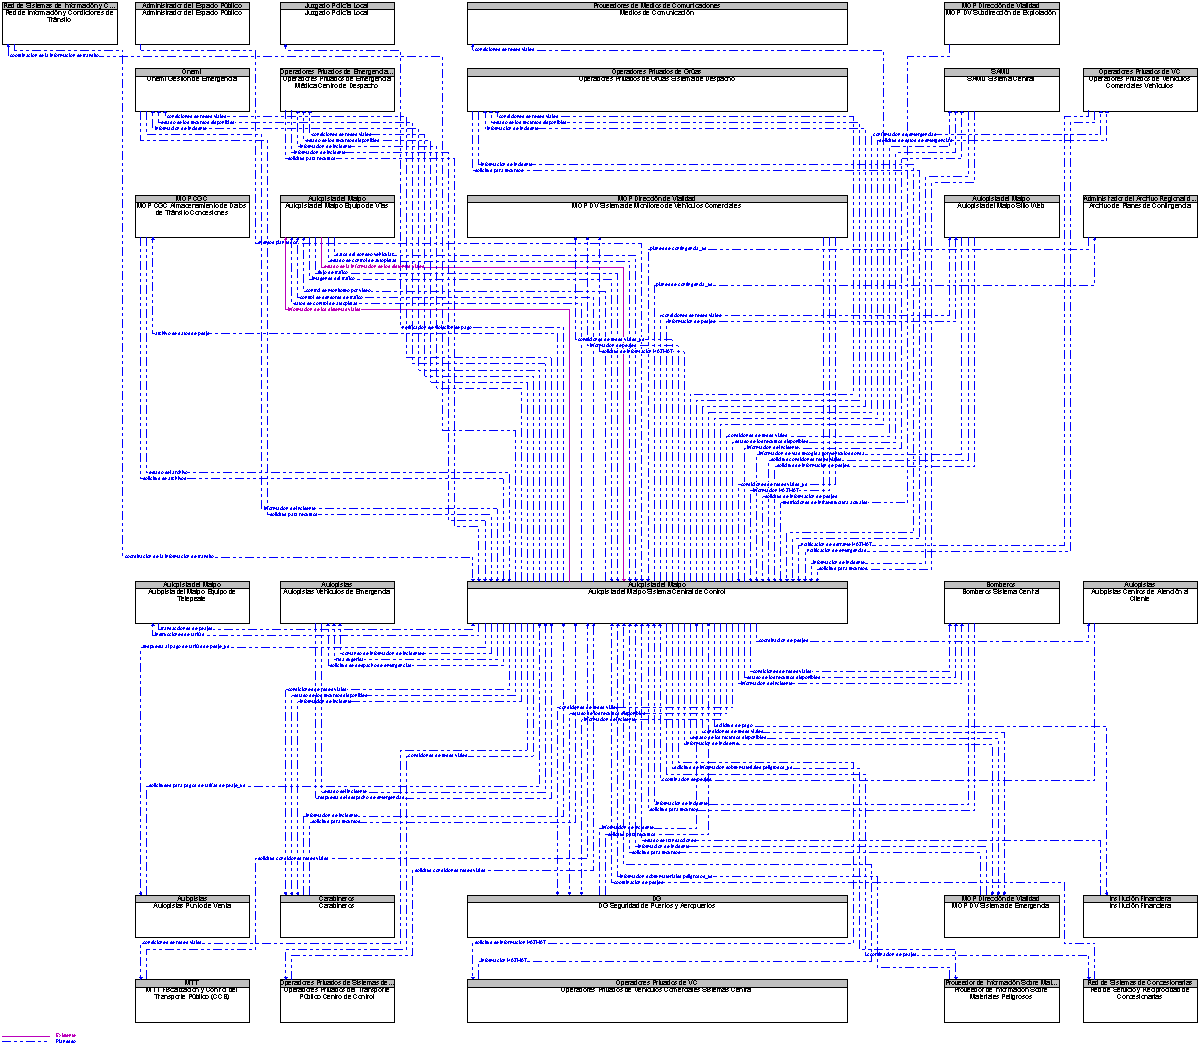 Diagrama Del Contexto por Autopista del Maipo Sistema Central de Control